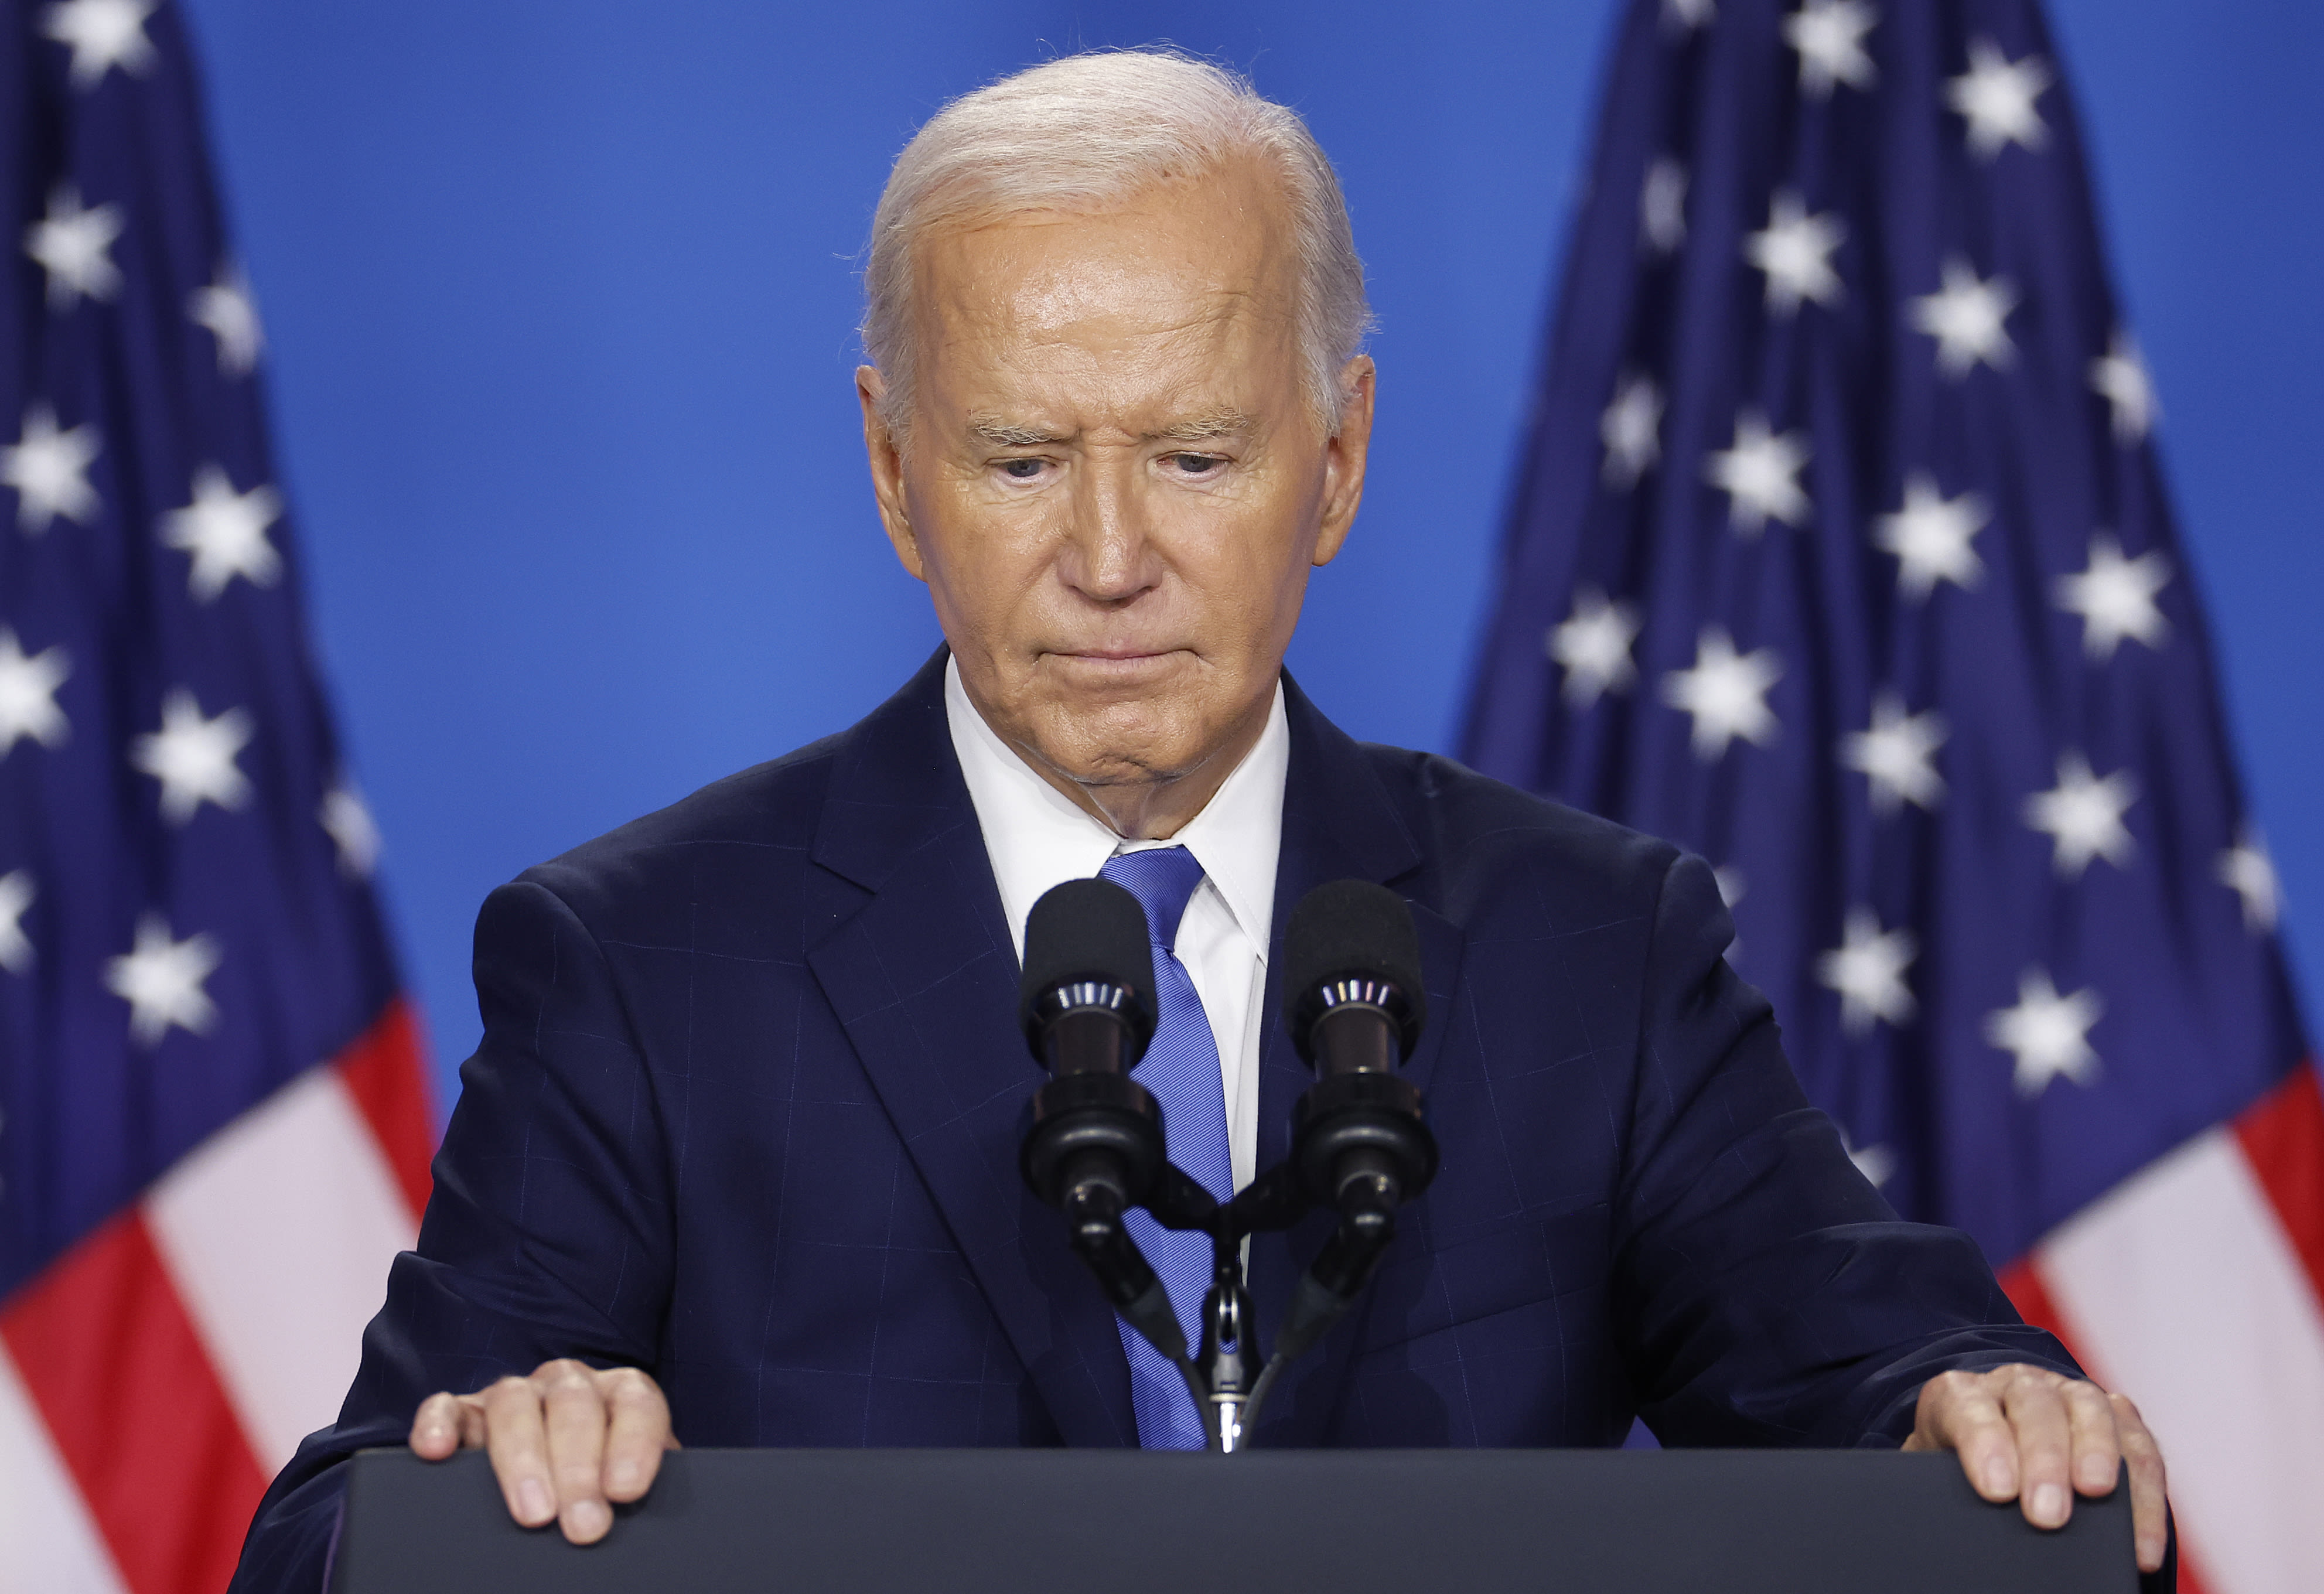 Joe Biden press conference reactions highlight Democratic Party divisions